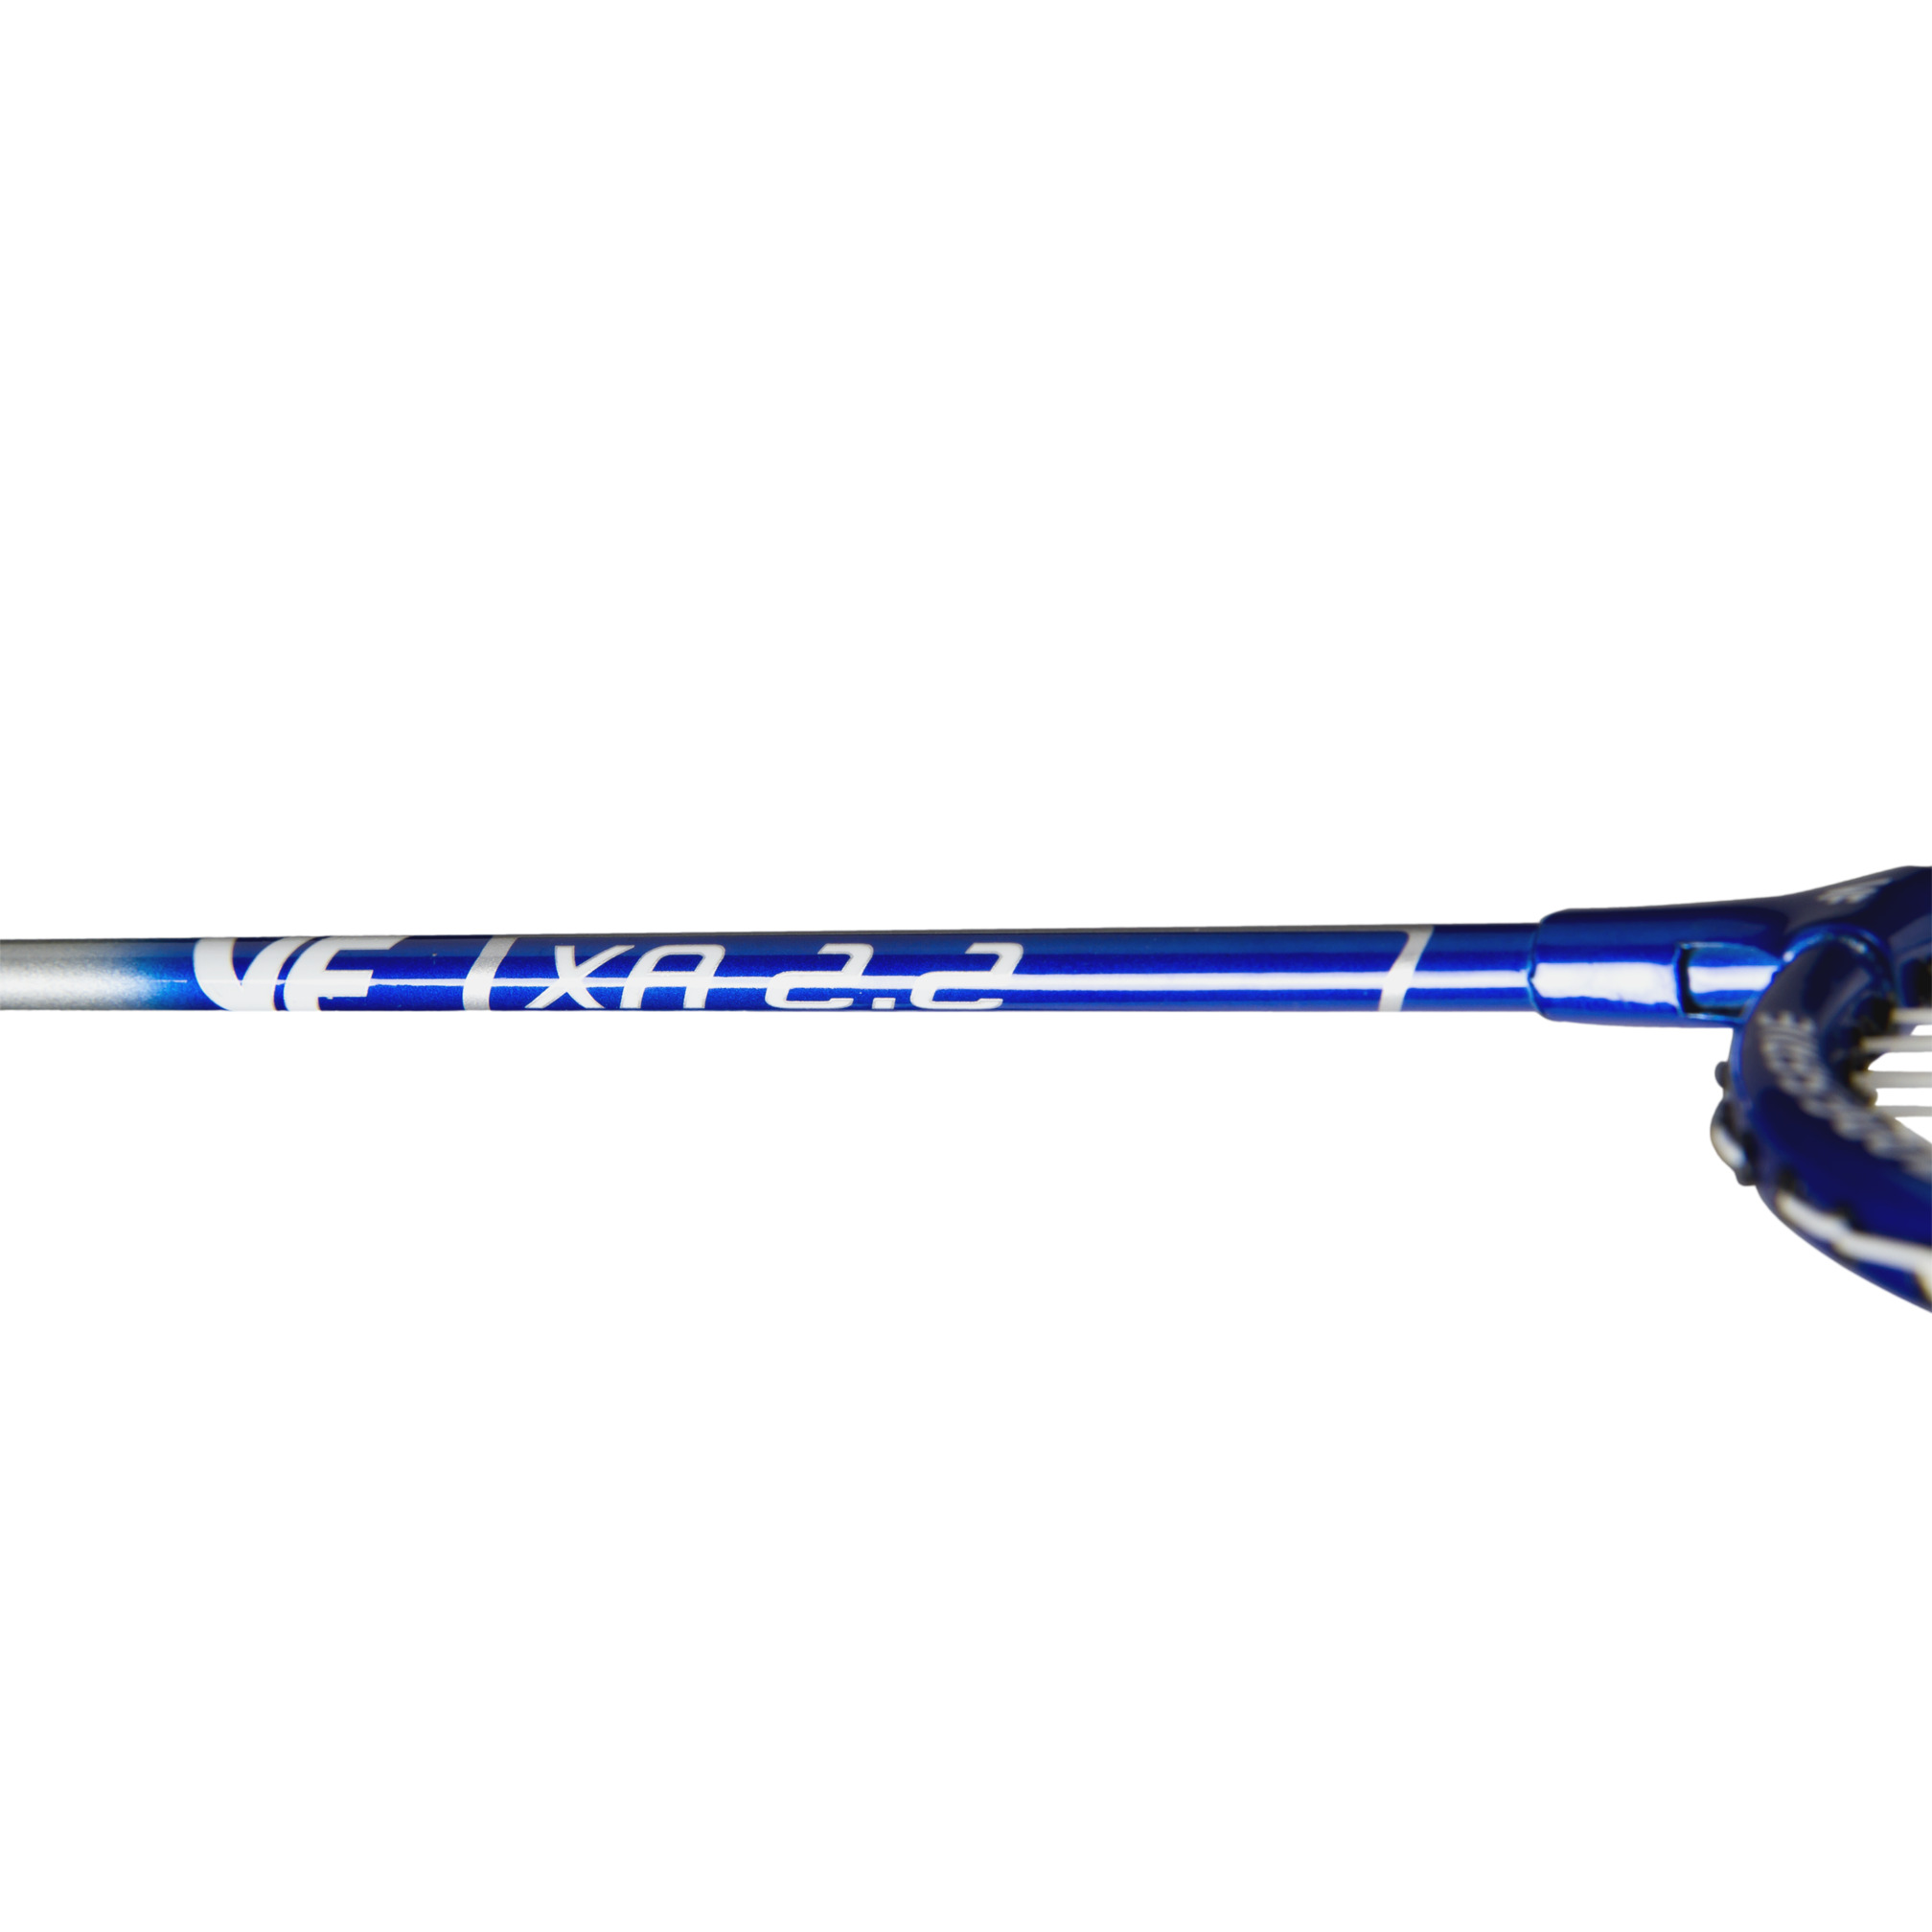 Badmintonschläger Vicfun XA Senior, Länge 68cm